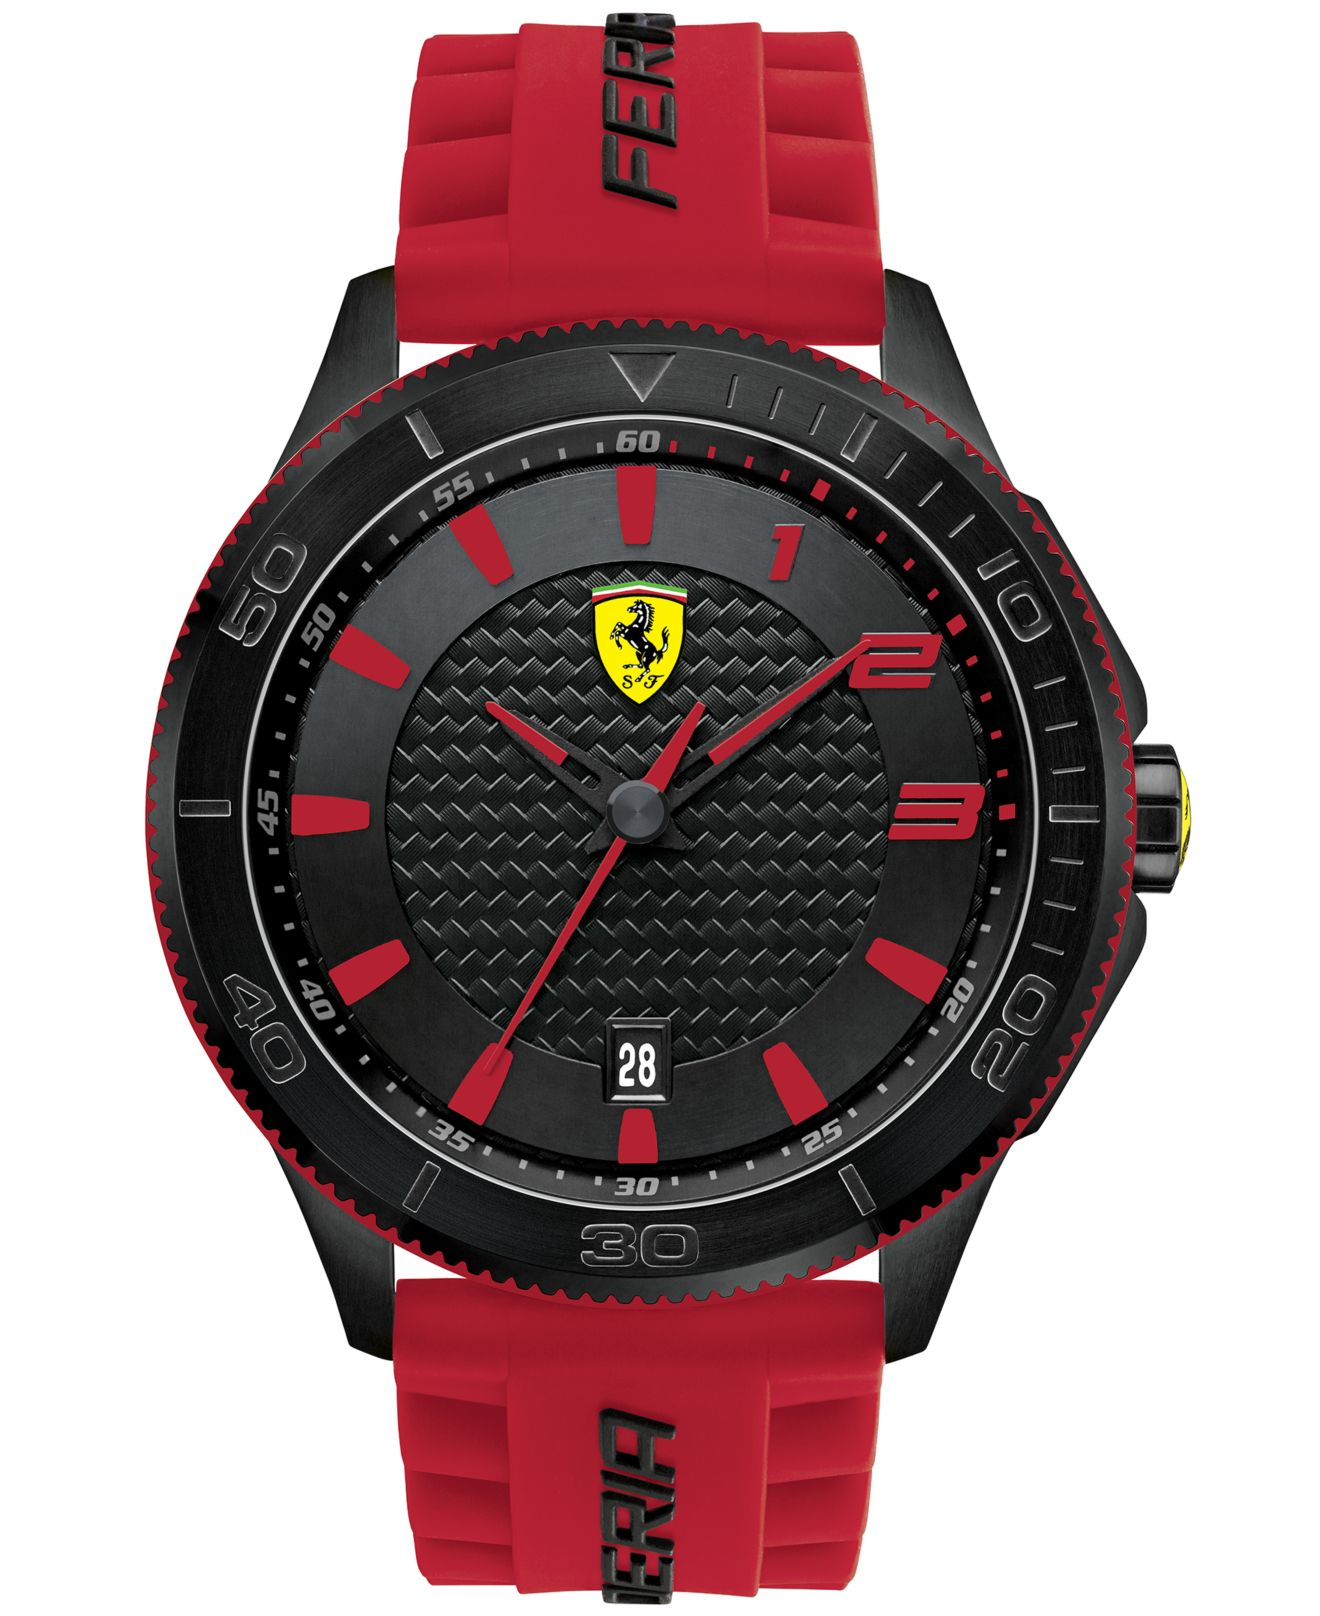 Ferrari часов. Часы Феррари Скудерия. Scuderia Ferrari часы мужские. Часы Скудерия Феррари мужские. Наручные часы Ferrari 830157.